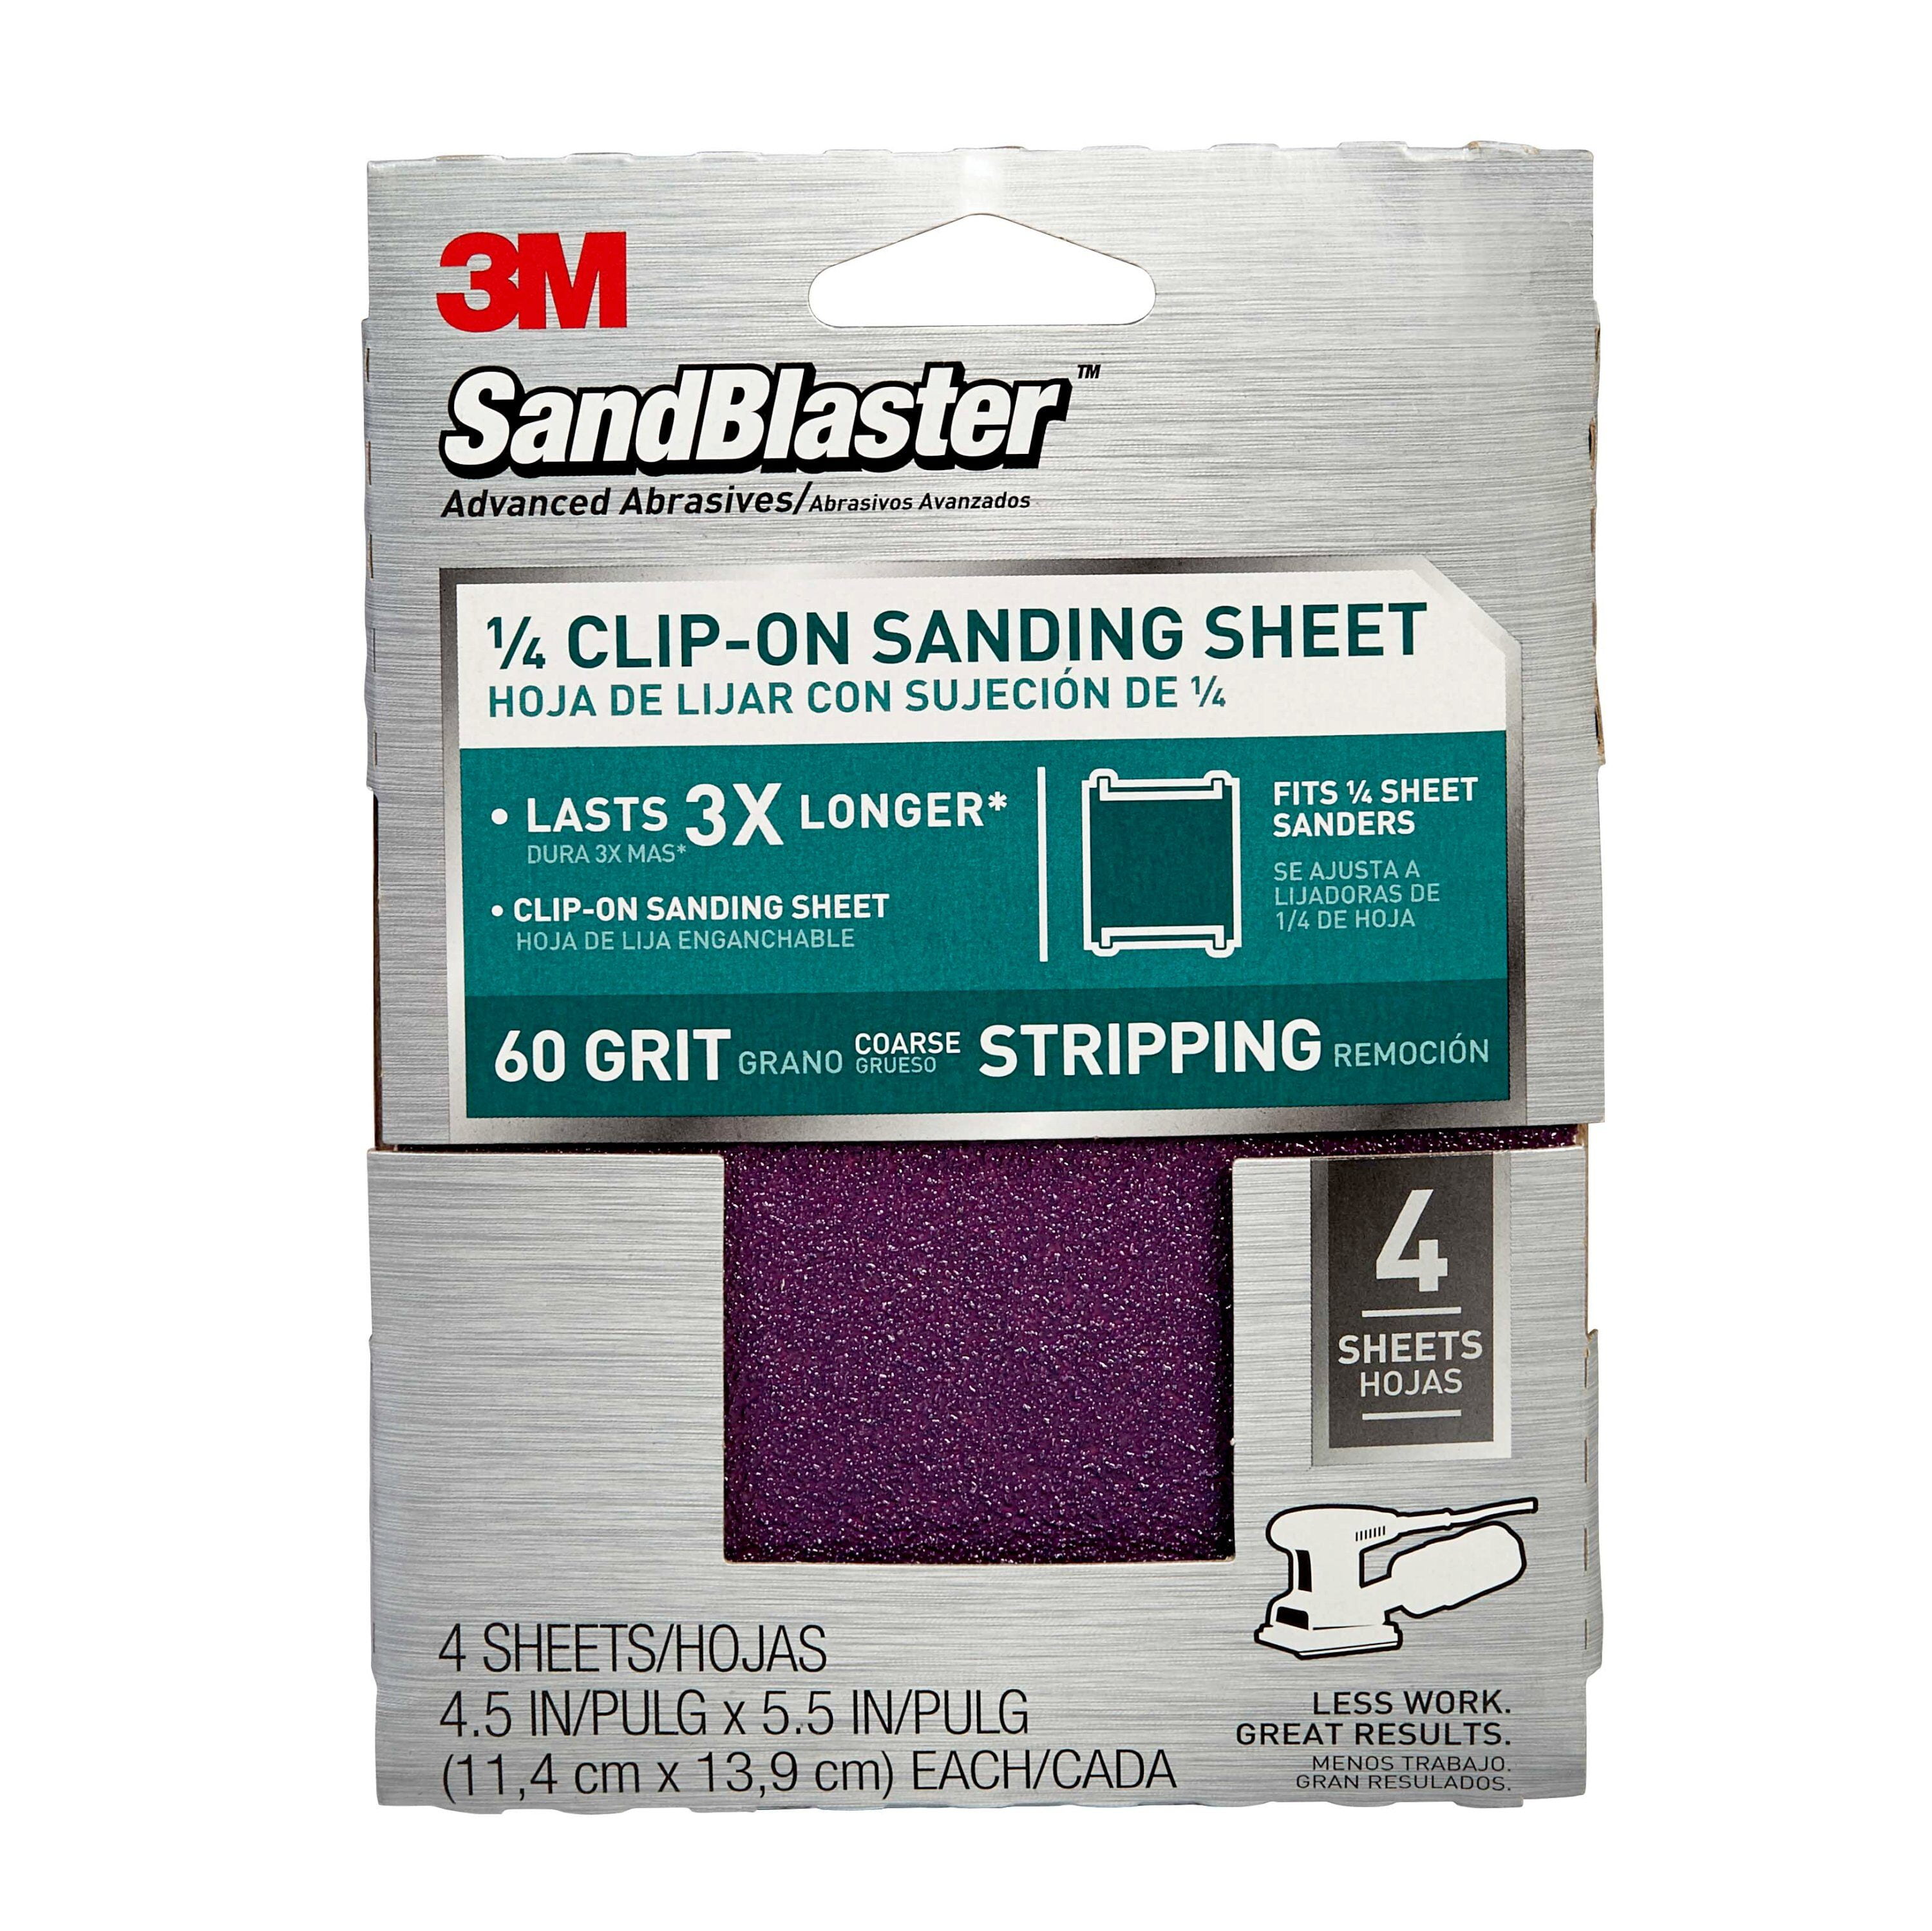 100-Grit 25-Pack 4.5" x 5.5" Gator 5132 1/4 Sheet Clamp-On Sandpaper